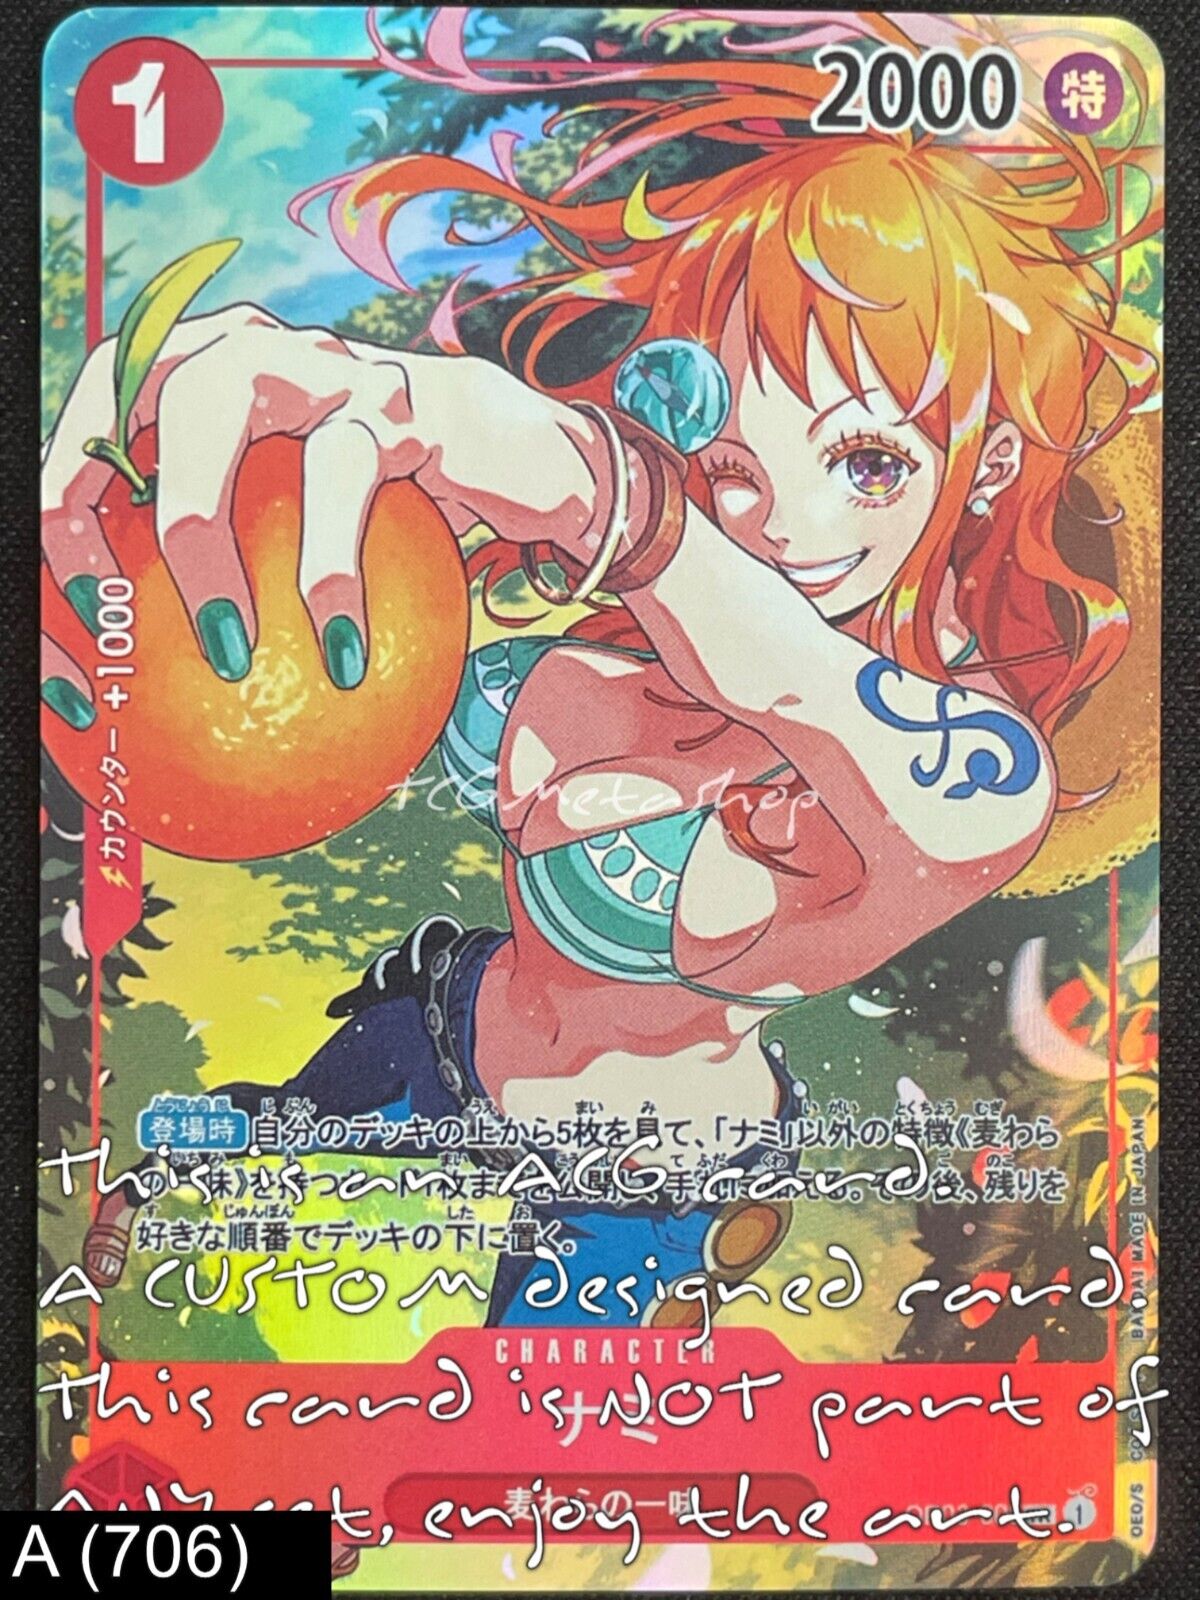 🔥 A 706 Nami One Piece Goddess Story Anime Waifu Card ACG 🔥